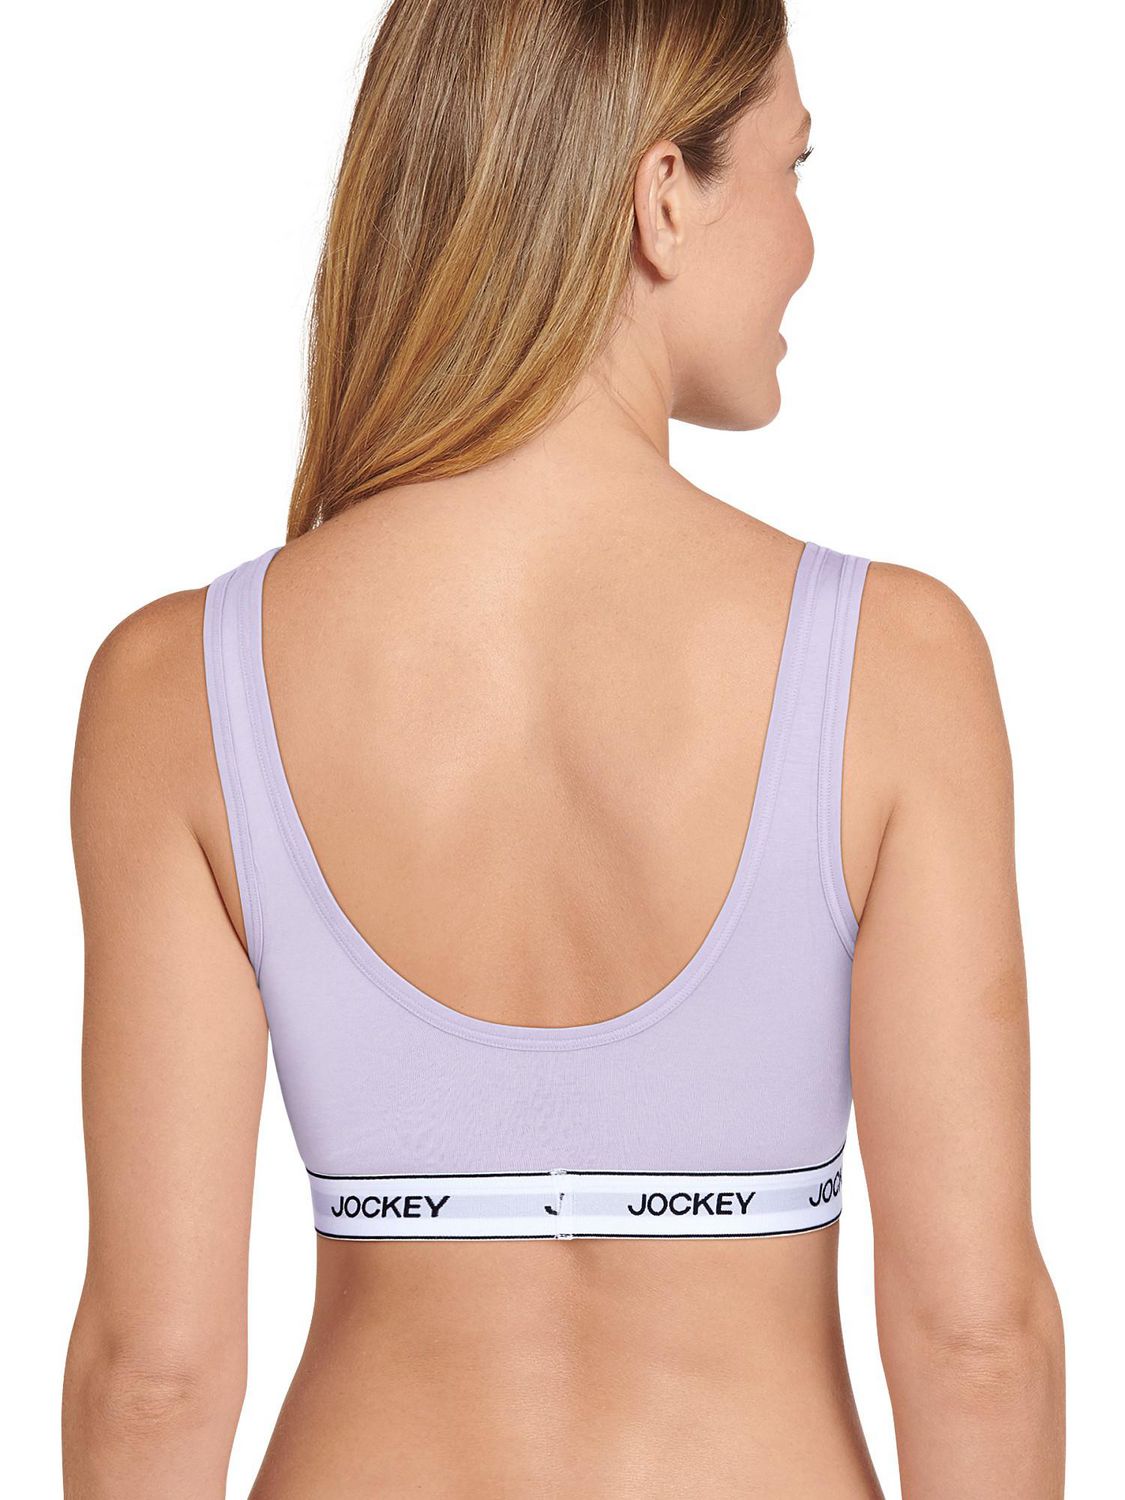 Jockey Essentials Women's Cotton Stretch Scoop Bralette, Jockey